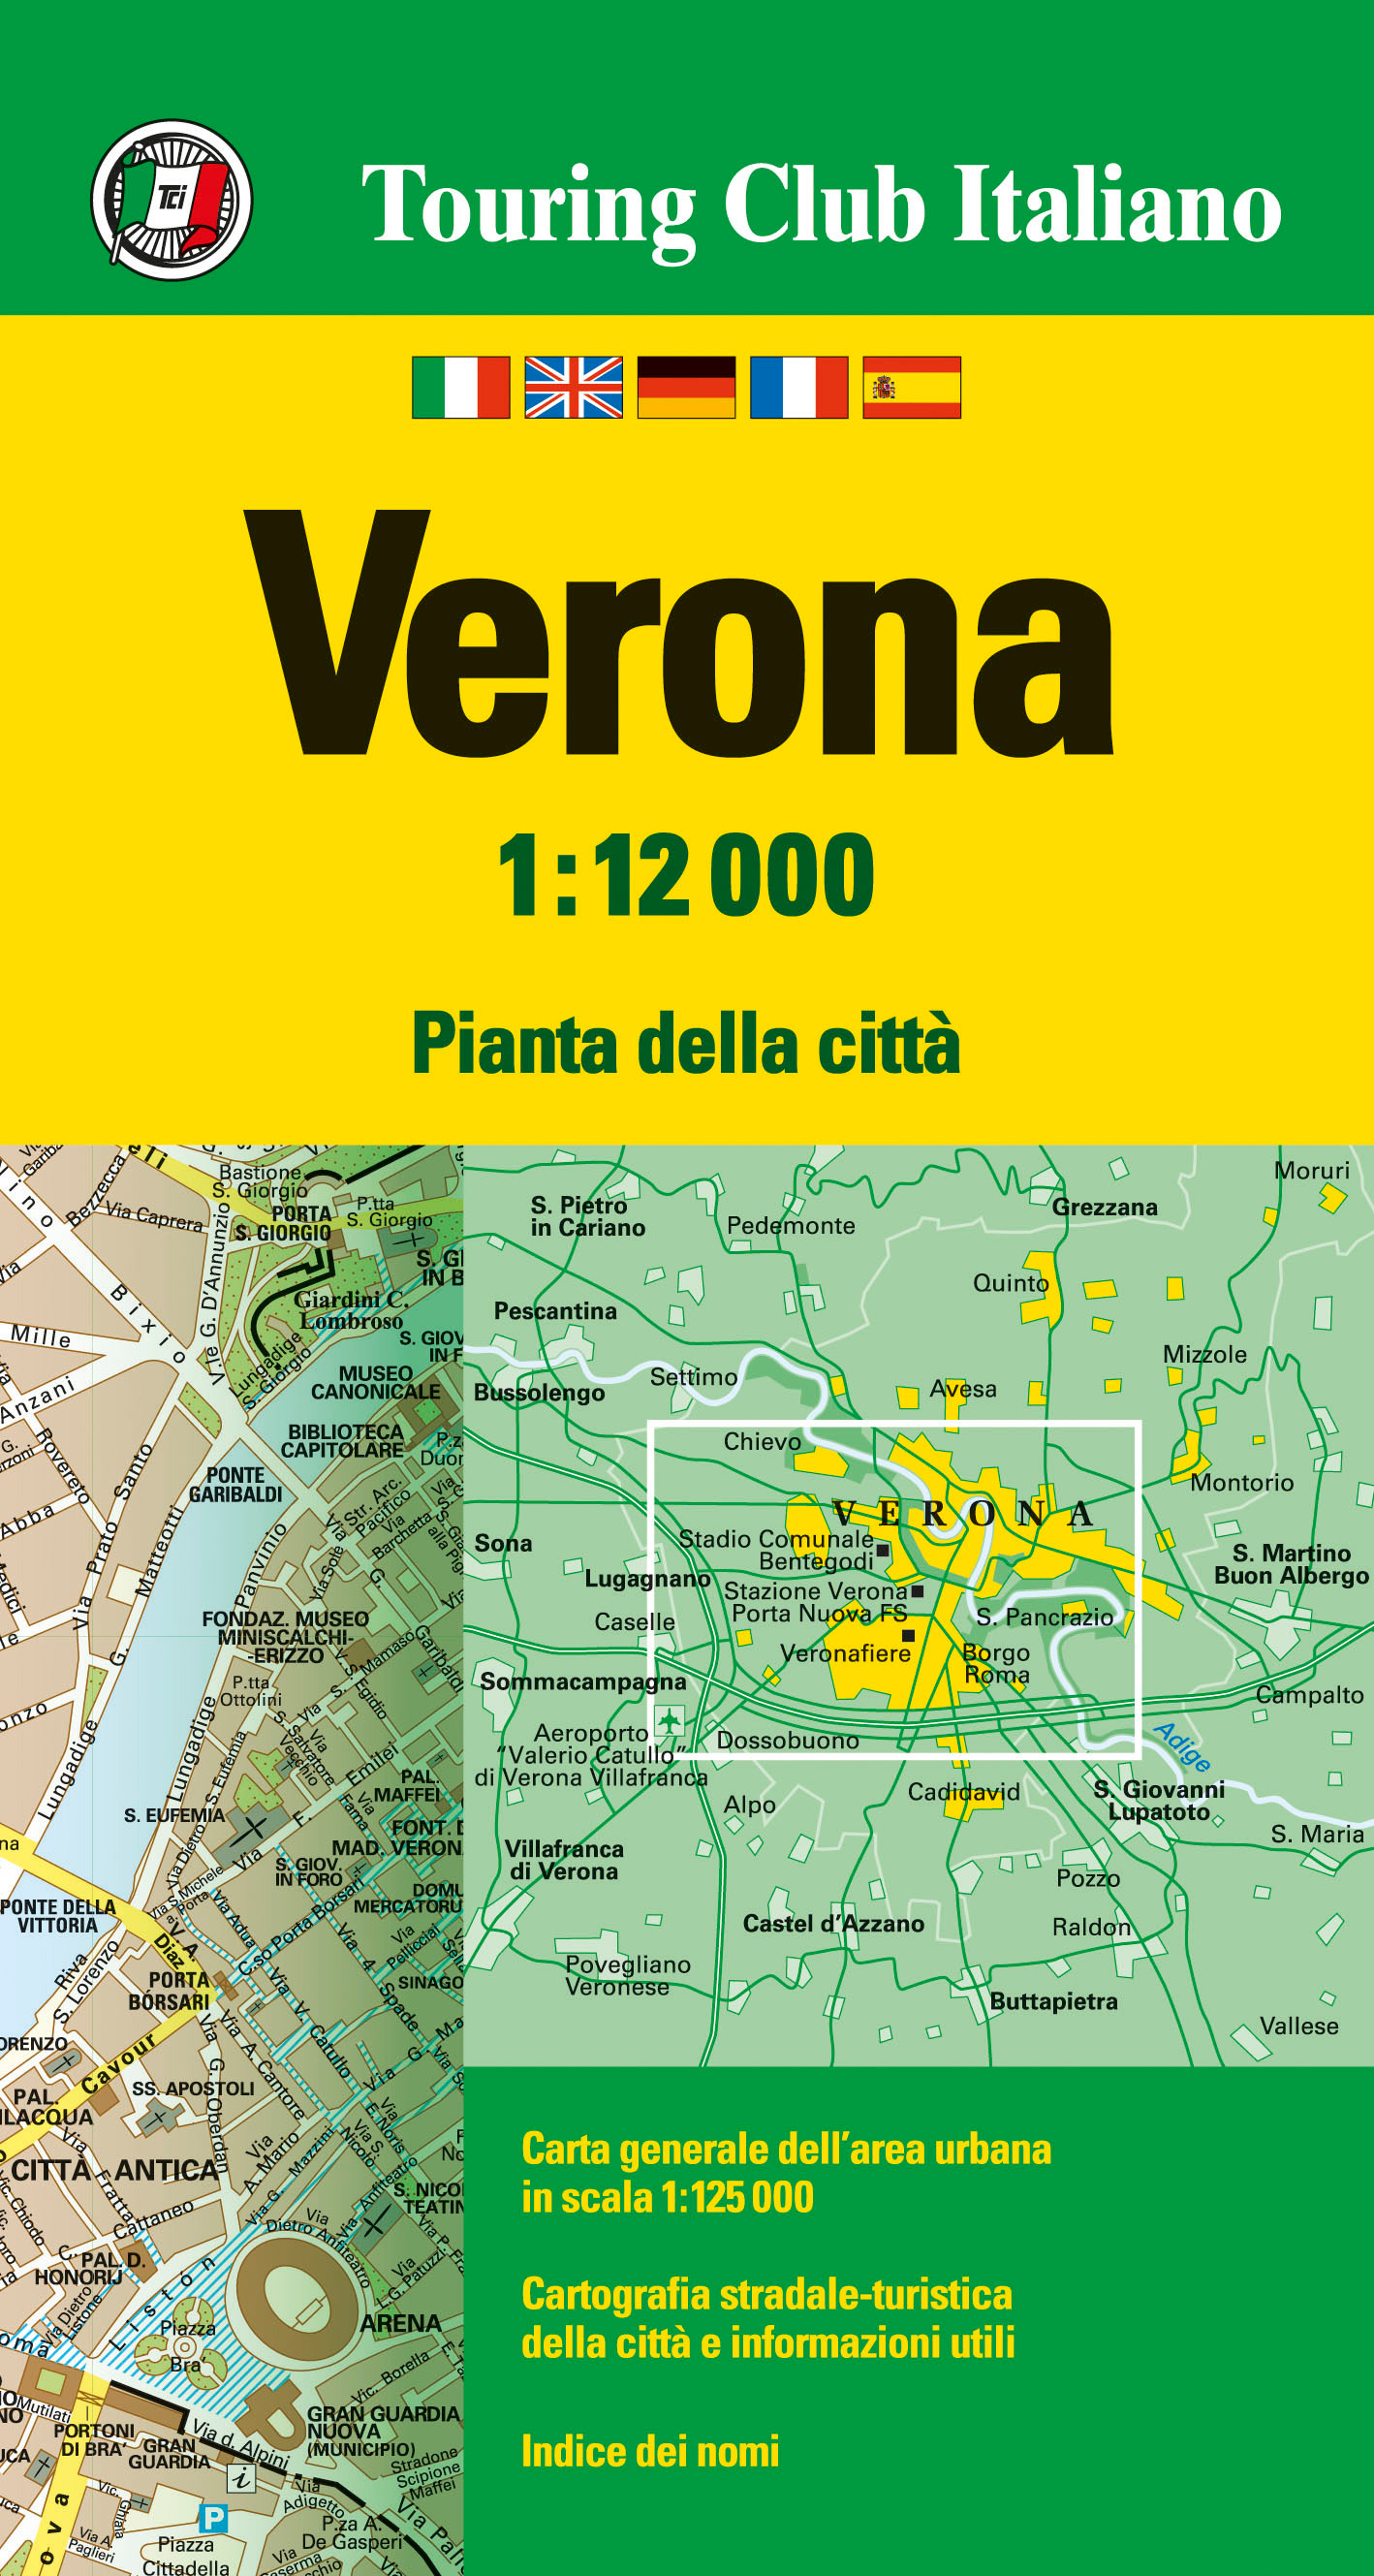 Stadsplattegrond Verona | Touring Club Italiano de zwerver